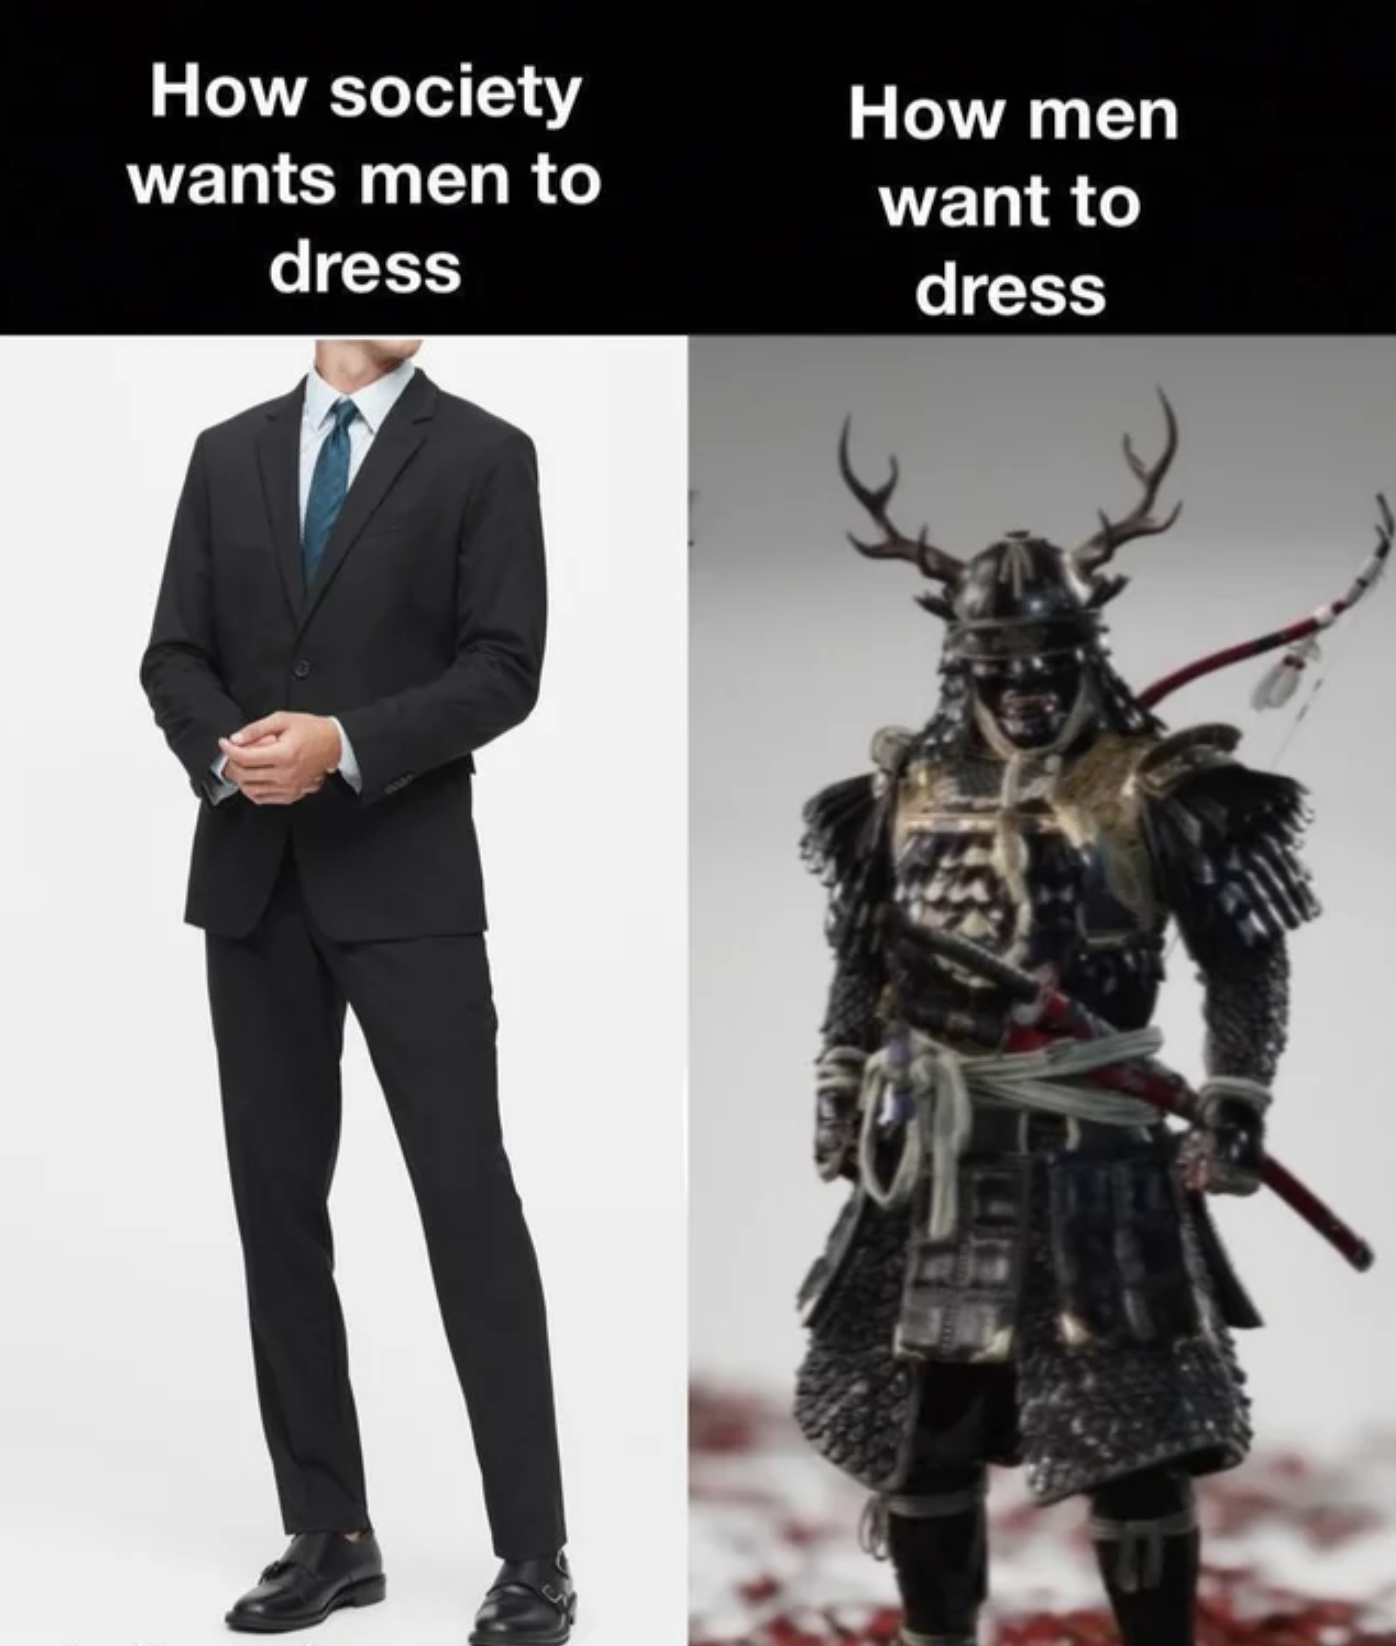 men want to dress meme - How society wants men to dress How men want to dress